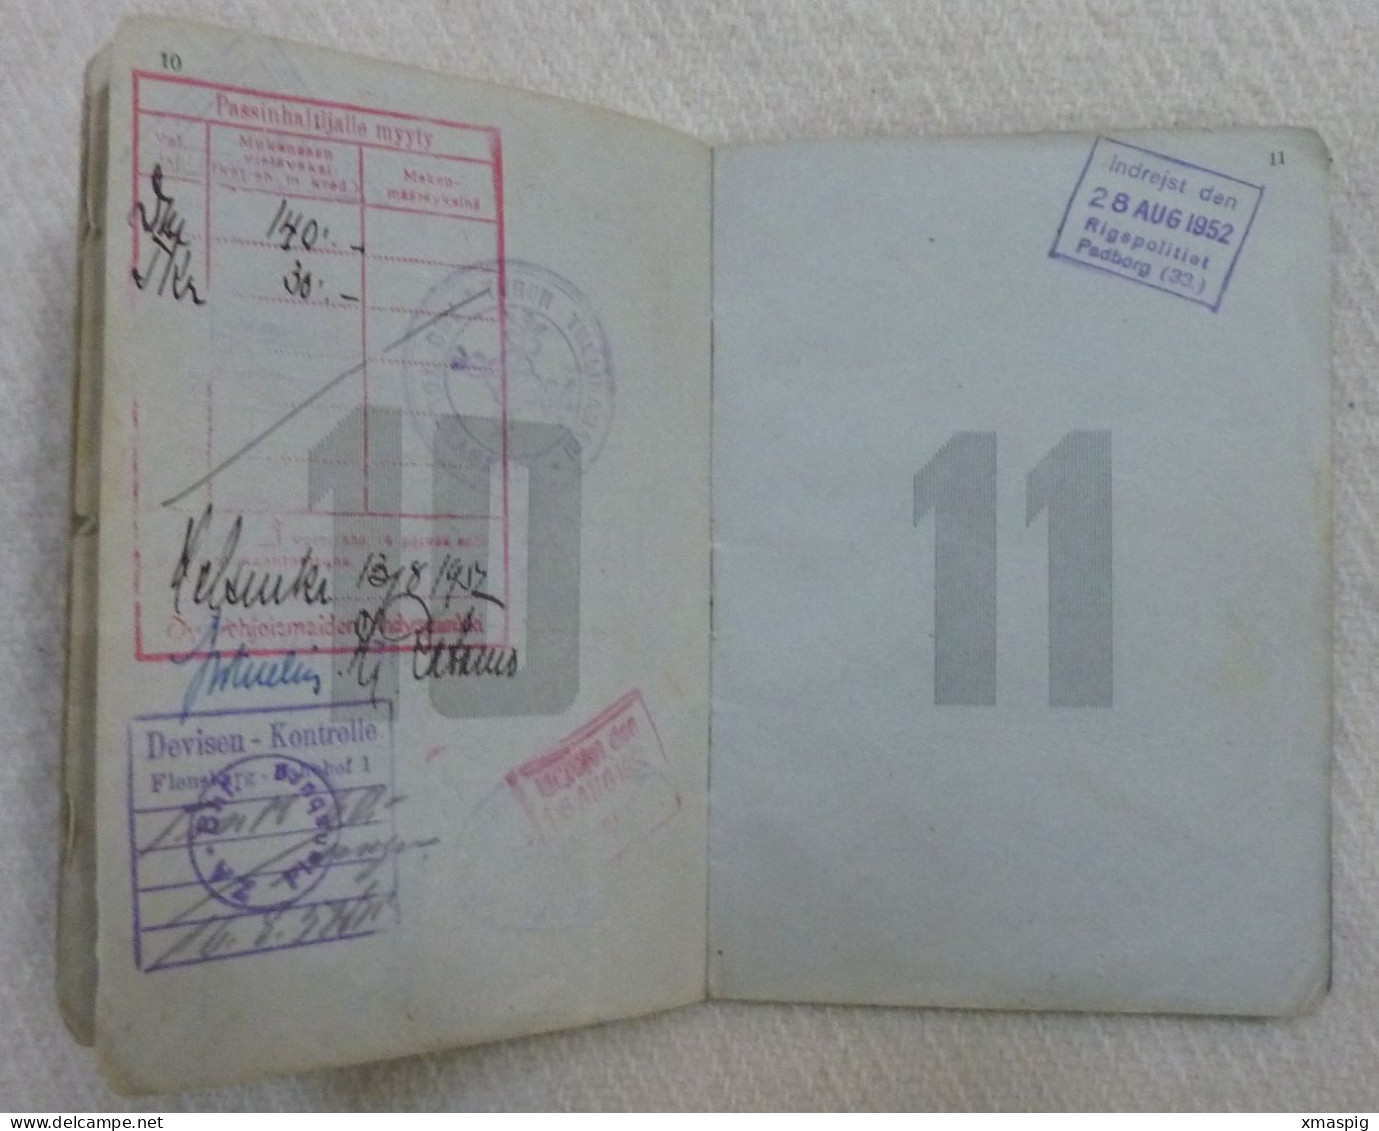 Passport Finland 1952 Reisepass Passeport Pasaporte Obsolete W Revenue Stamps - Documenti Storici